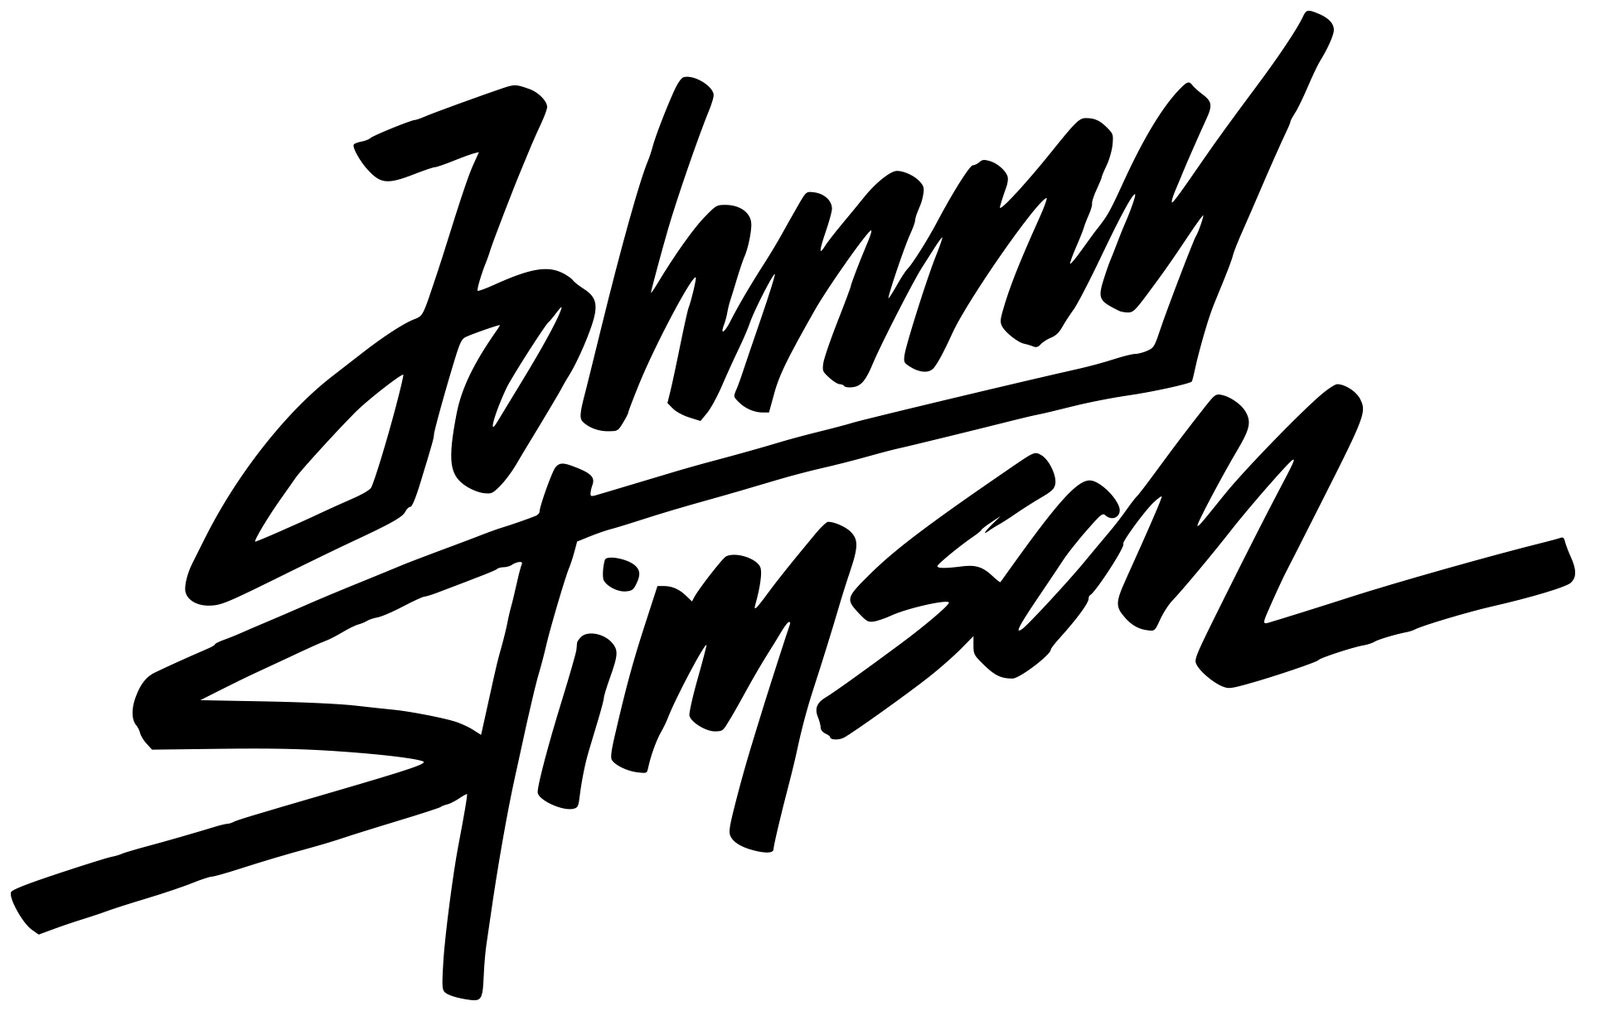 Johnny Stimson